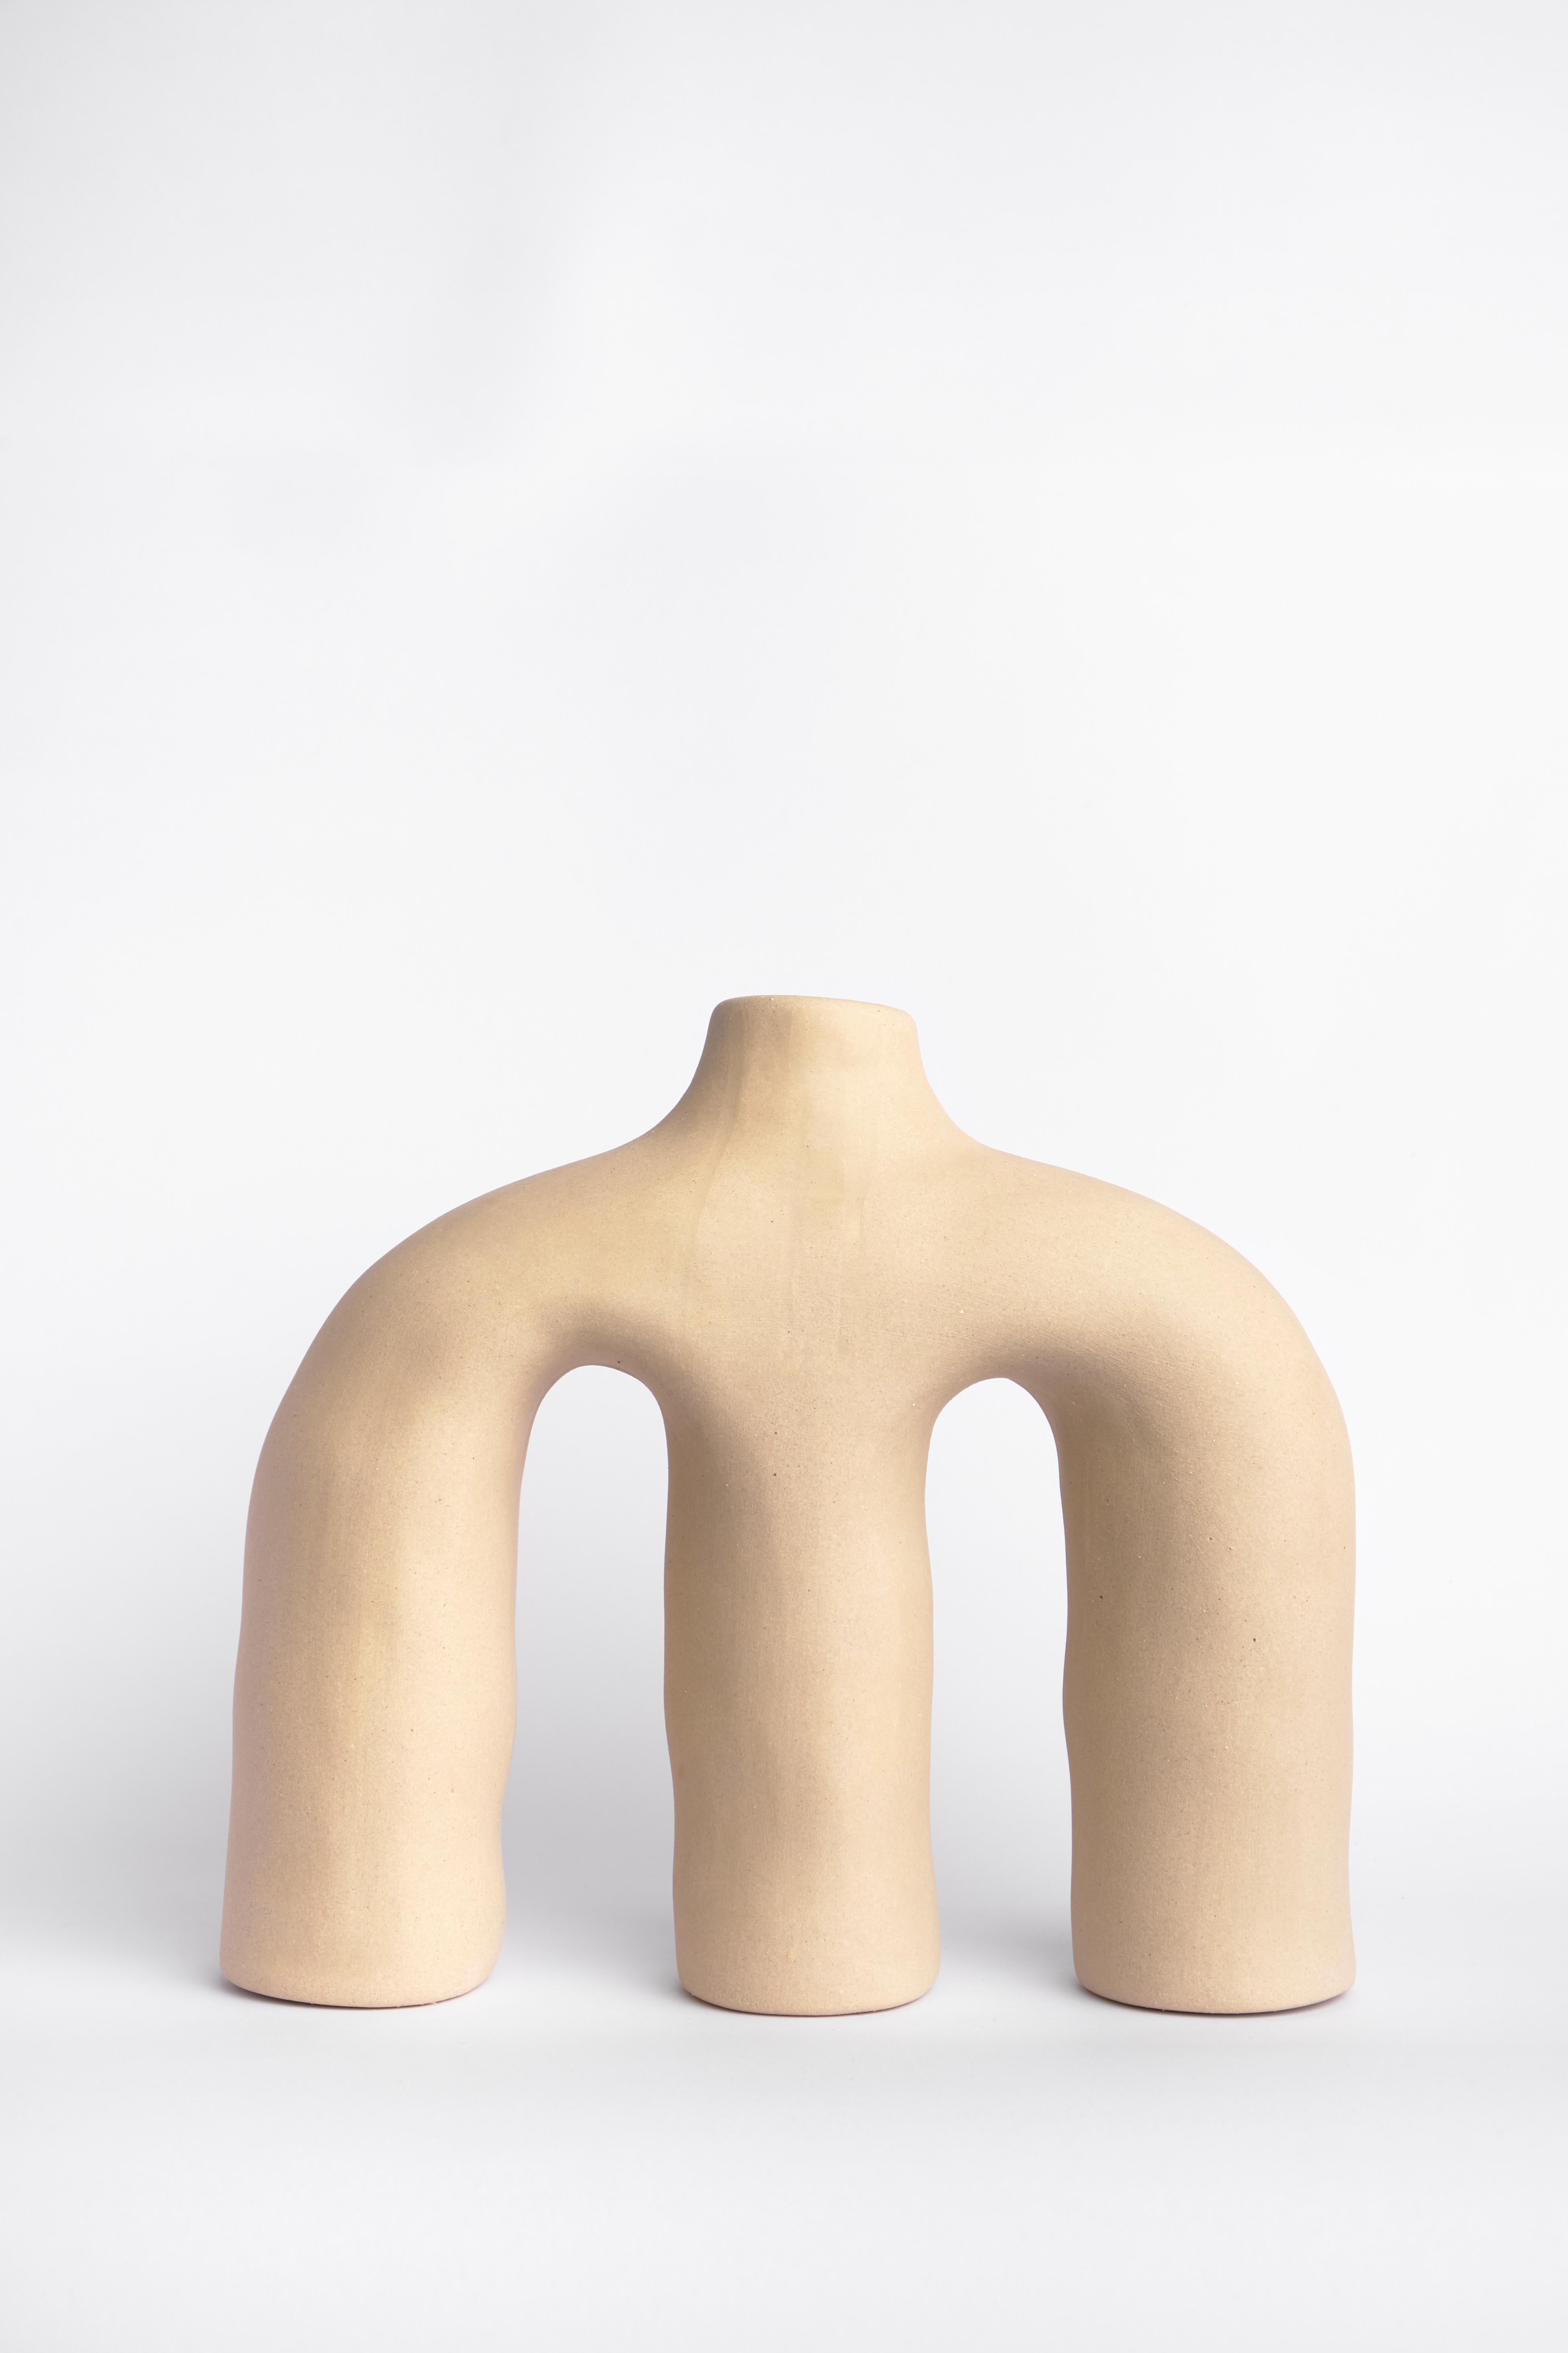 Mexican Anatomía Sutil Ceramic Sculptural Vase For Sale